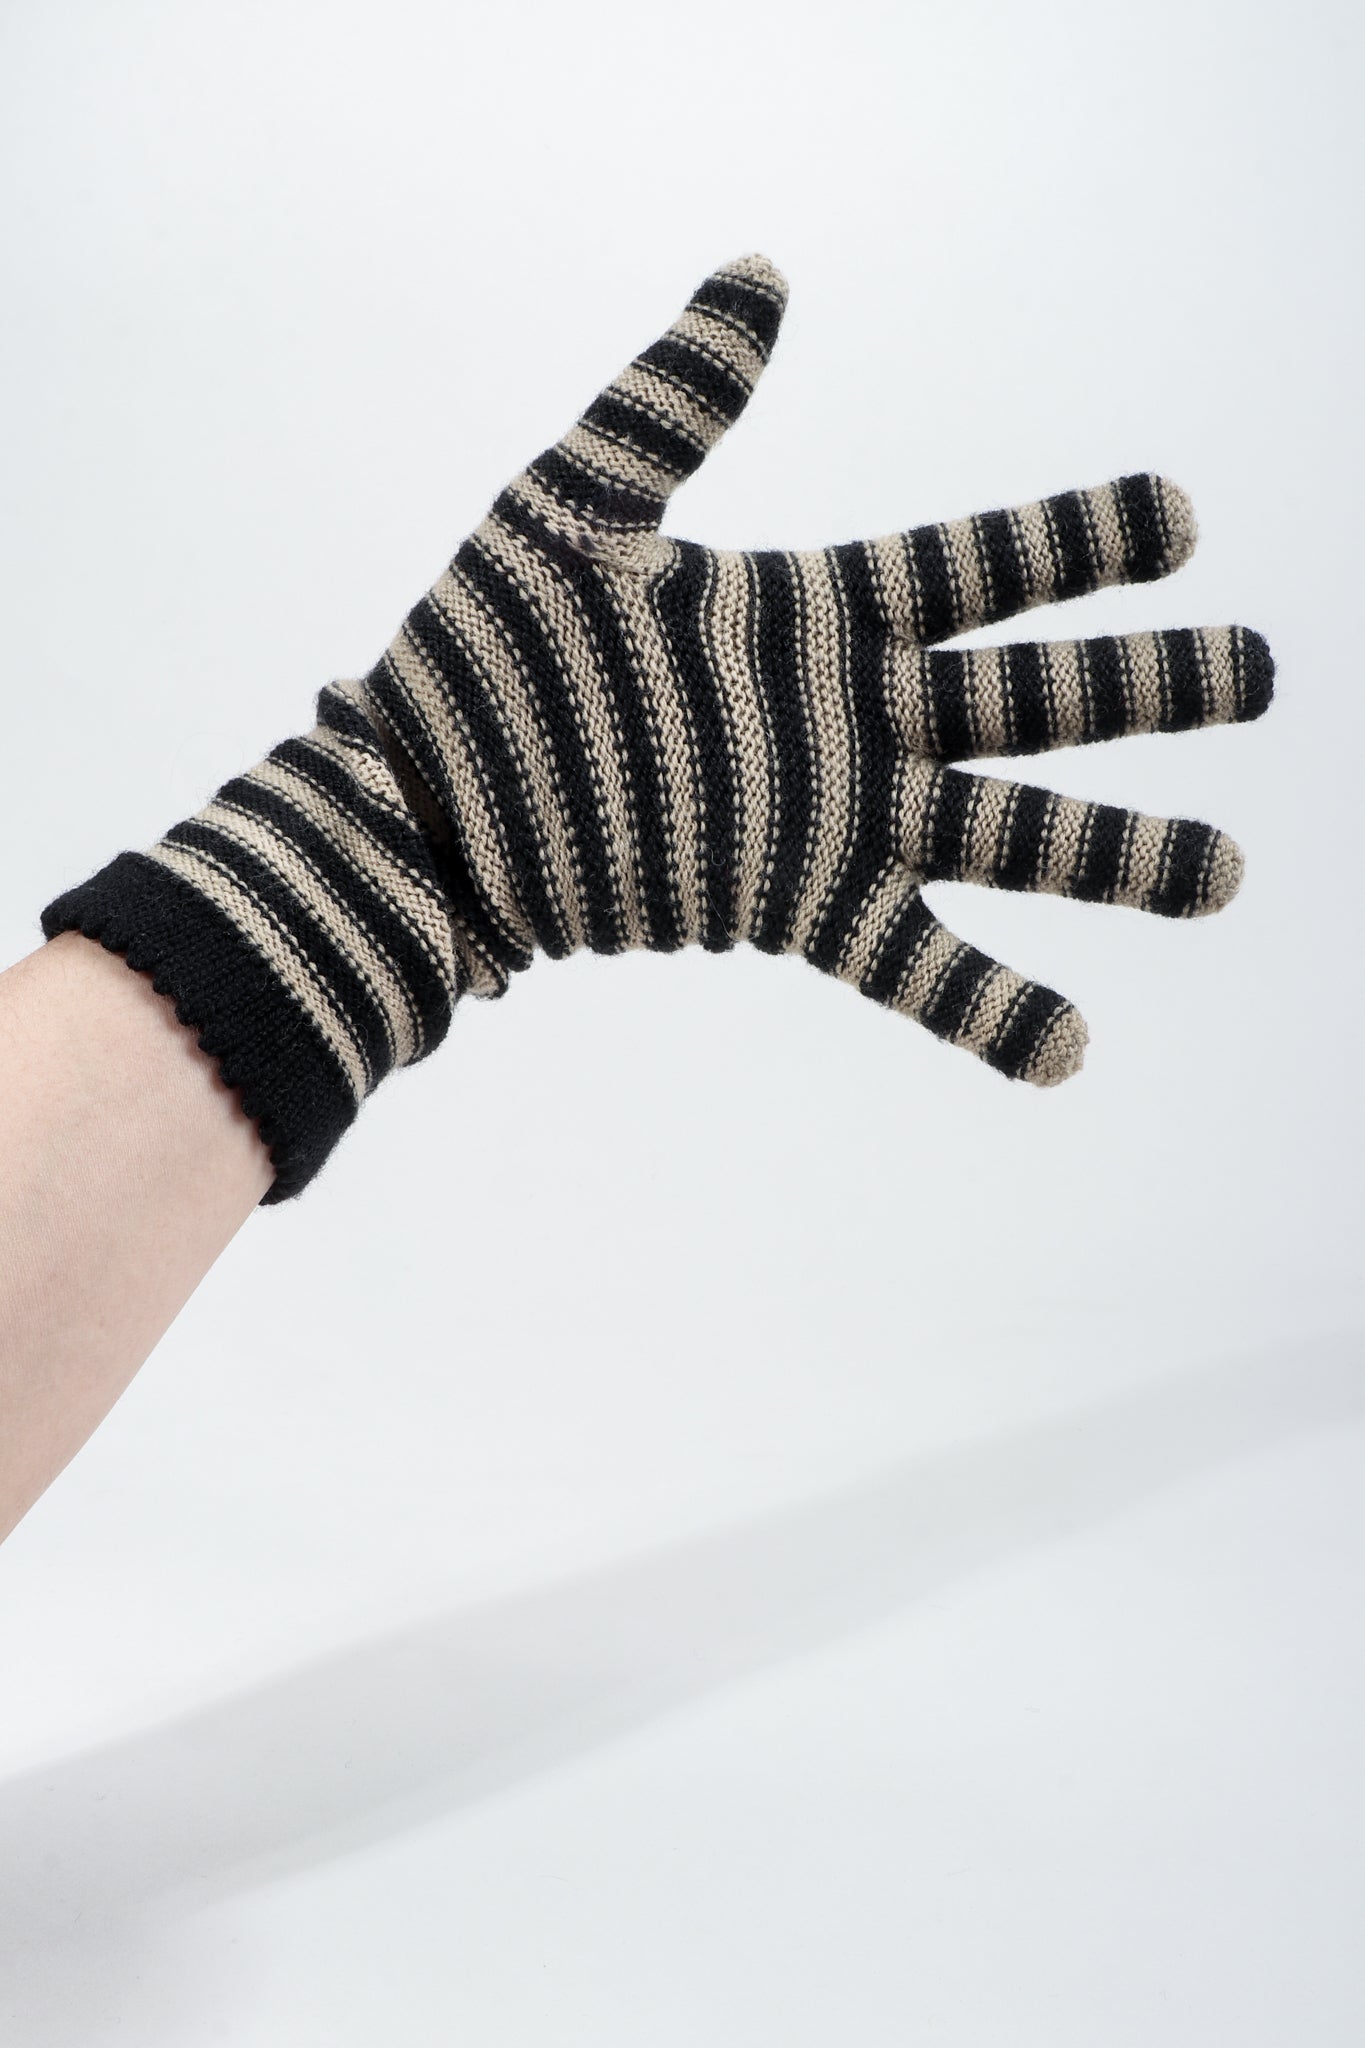 Vintage Sonia Rykiel Beige Stripe Knit Gloves on hand